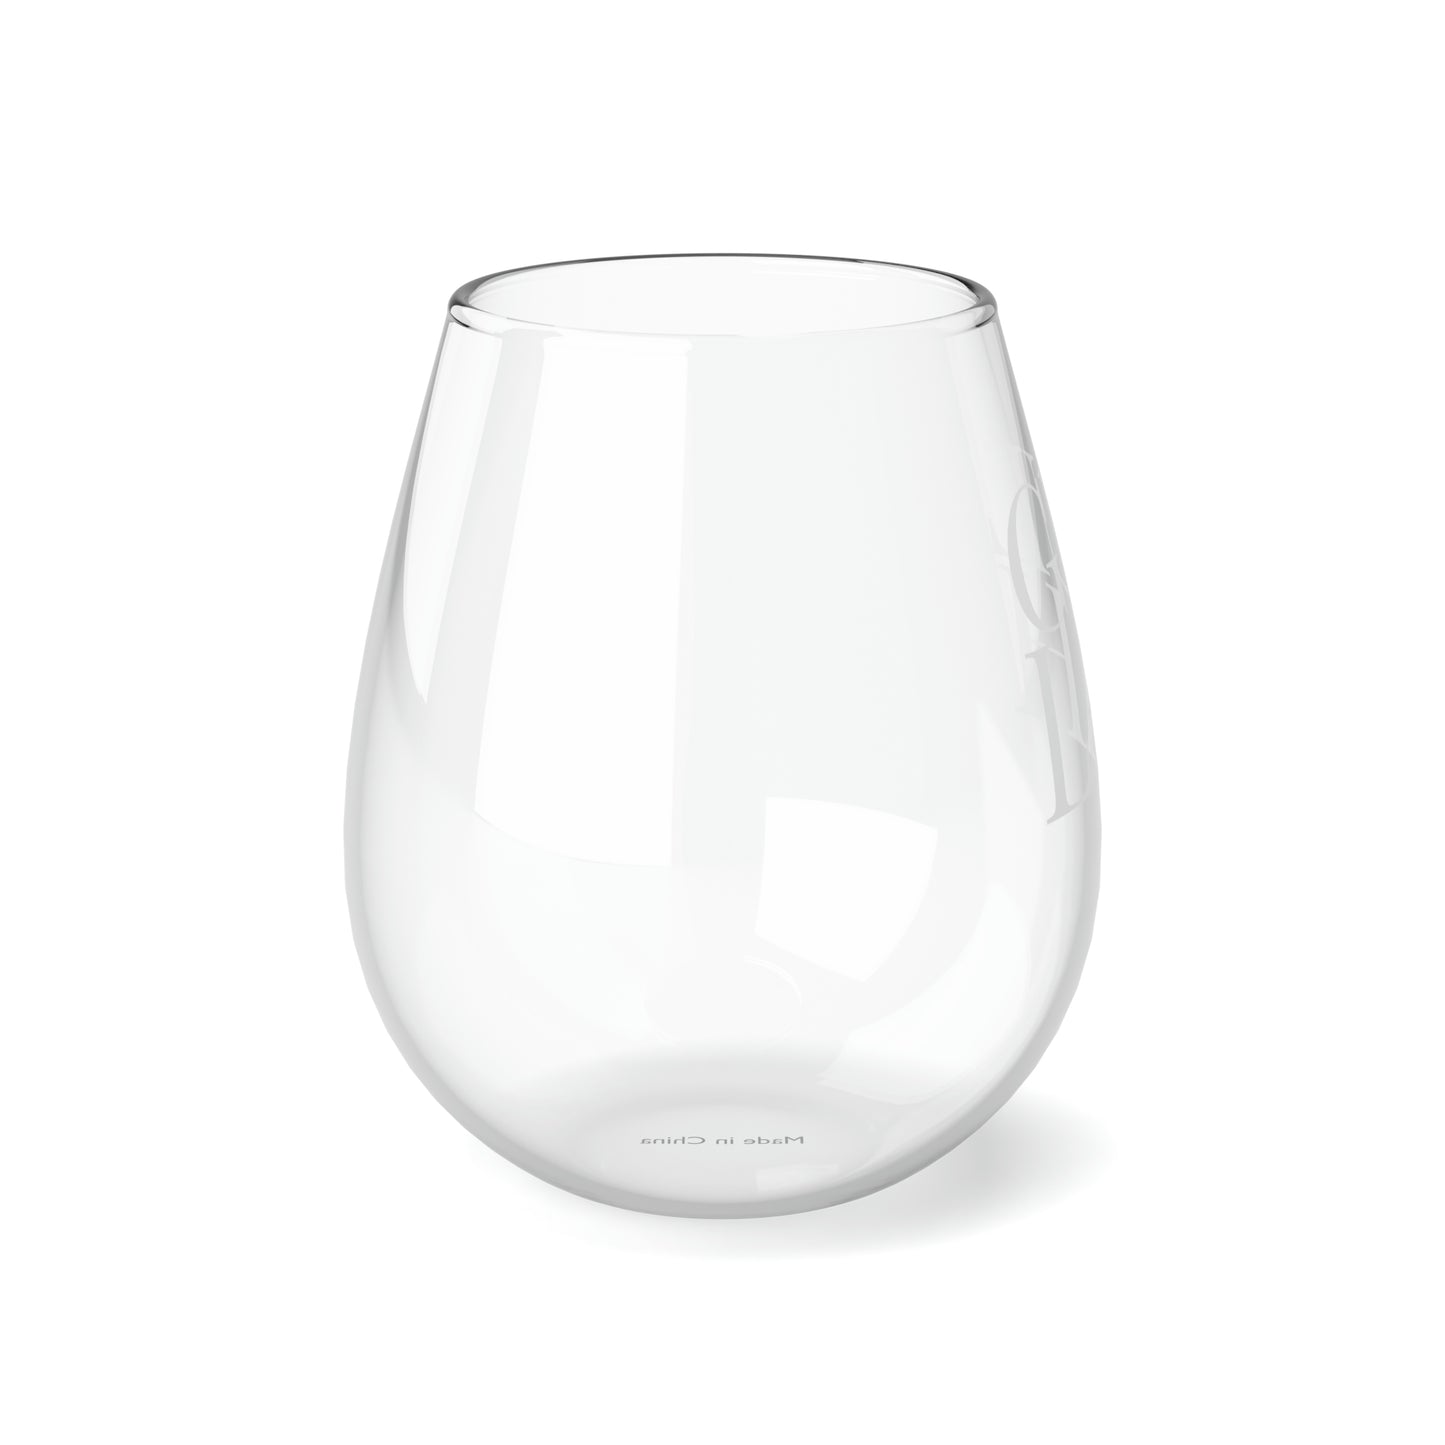 Gullah Stemless Wine Glass, 11.75oz